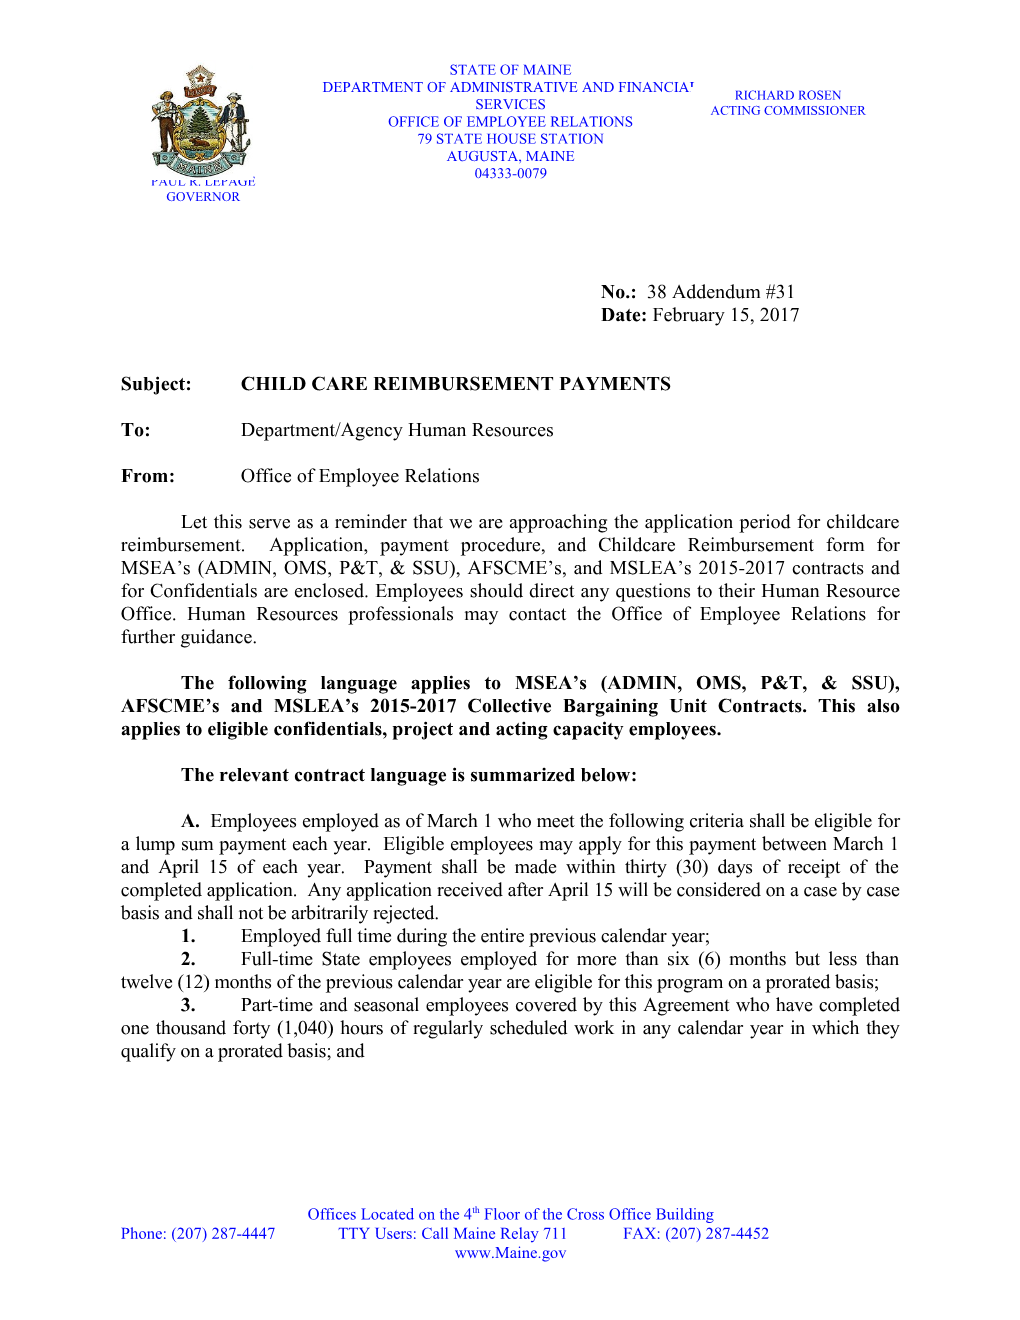 Subject: CHILD CARE REIMBURSEMENT PAYMENTS